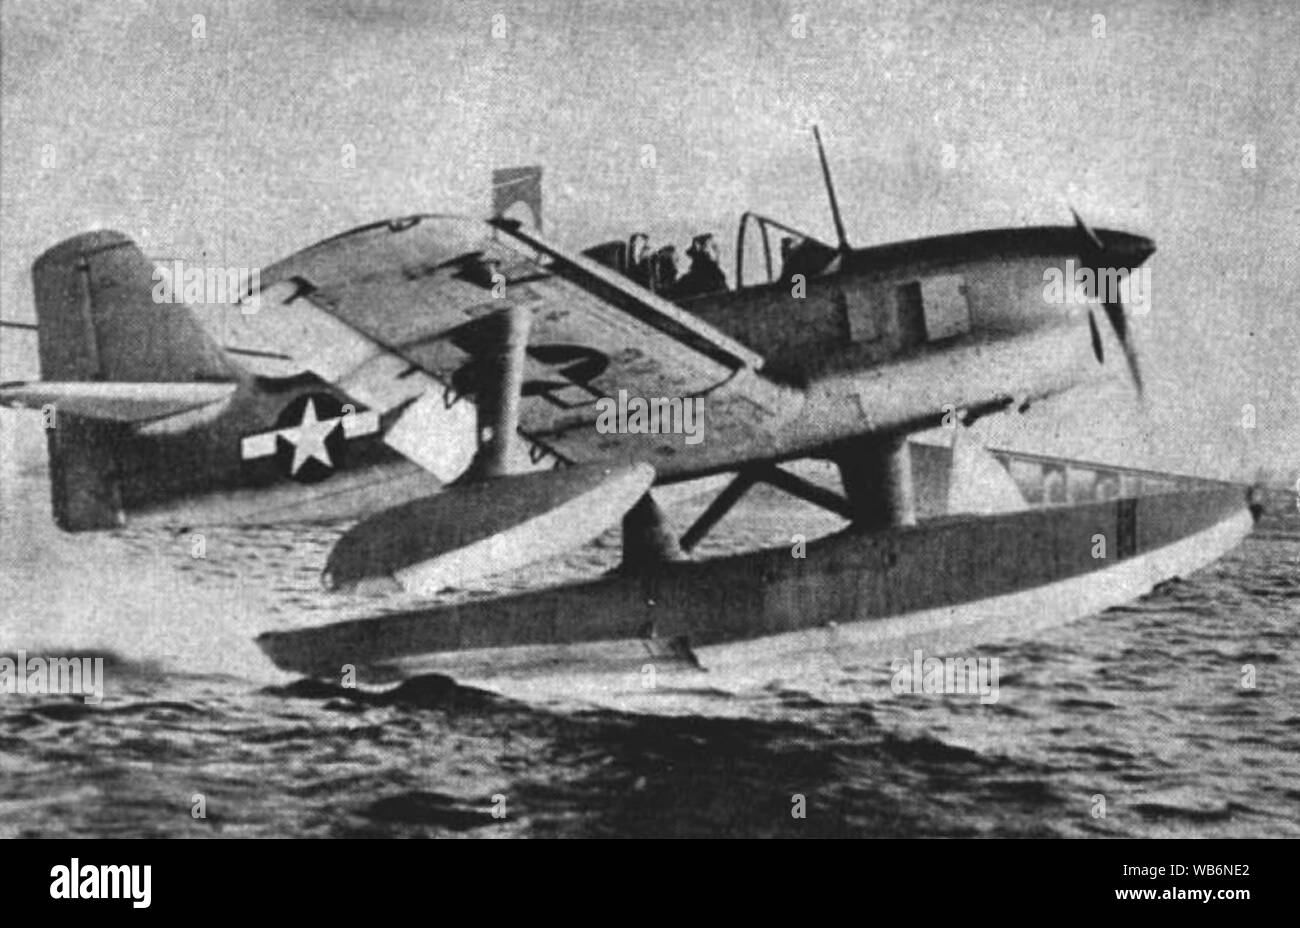 Edo XOSE-1 taking off in 1946. Stock Photo